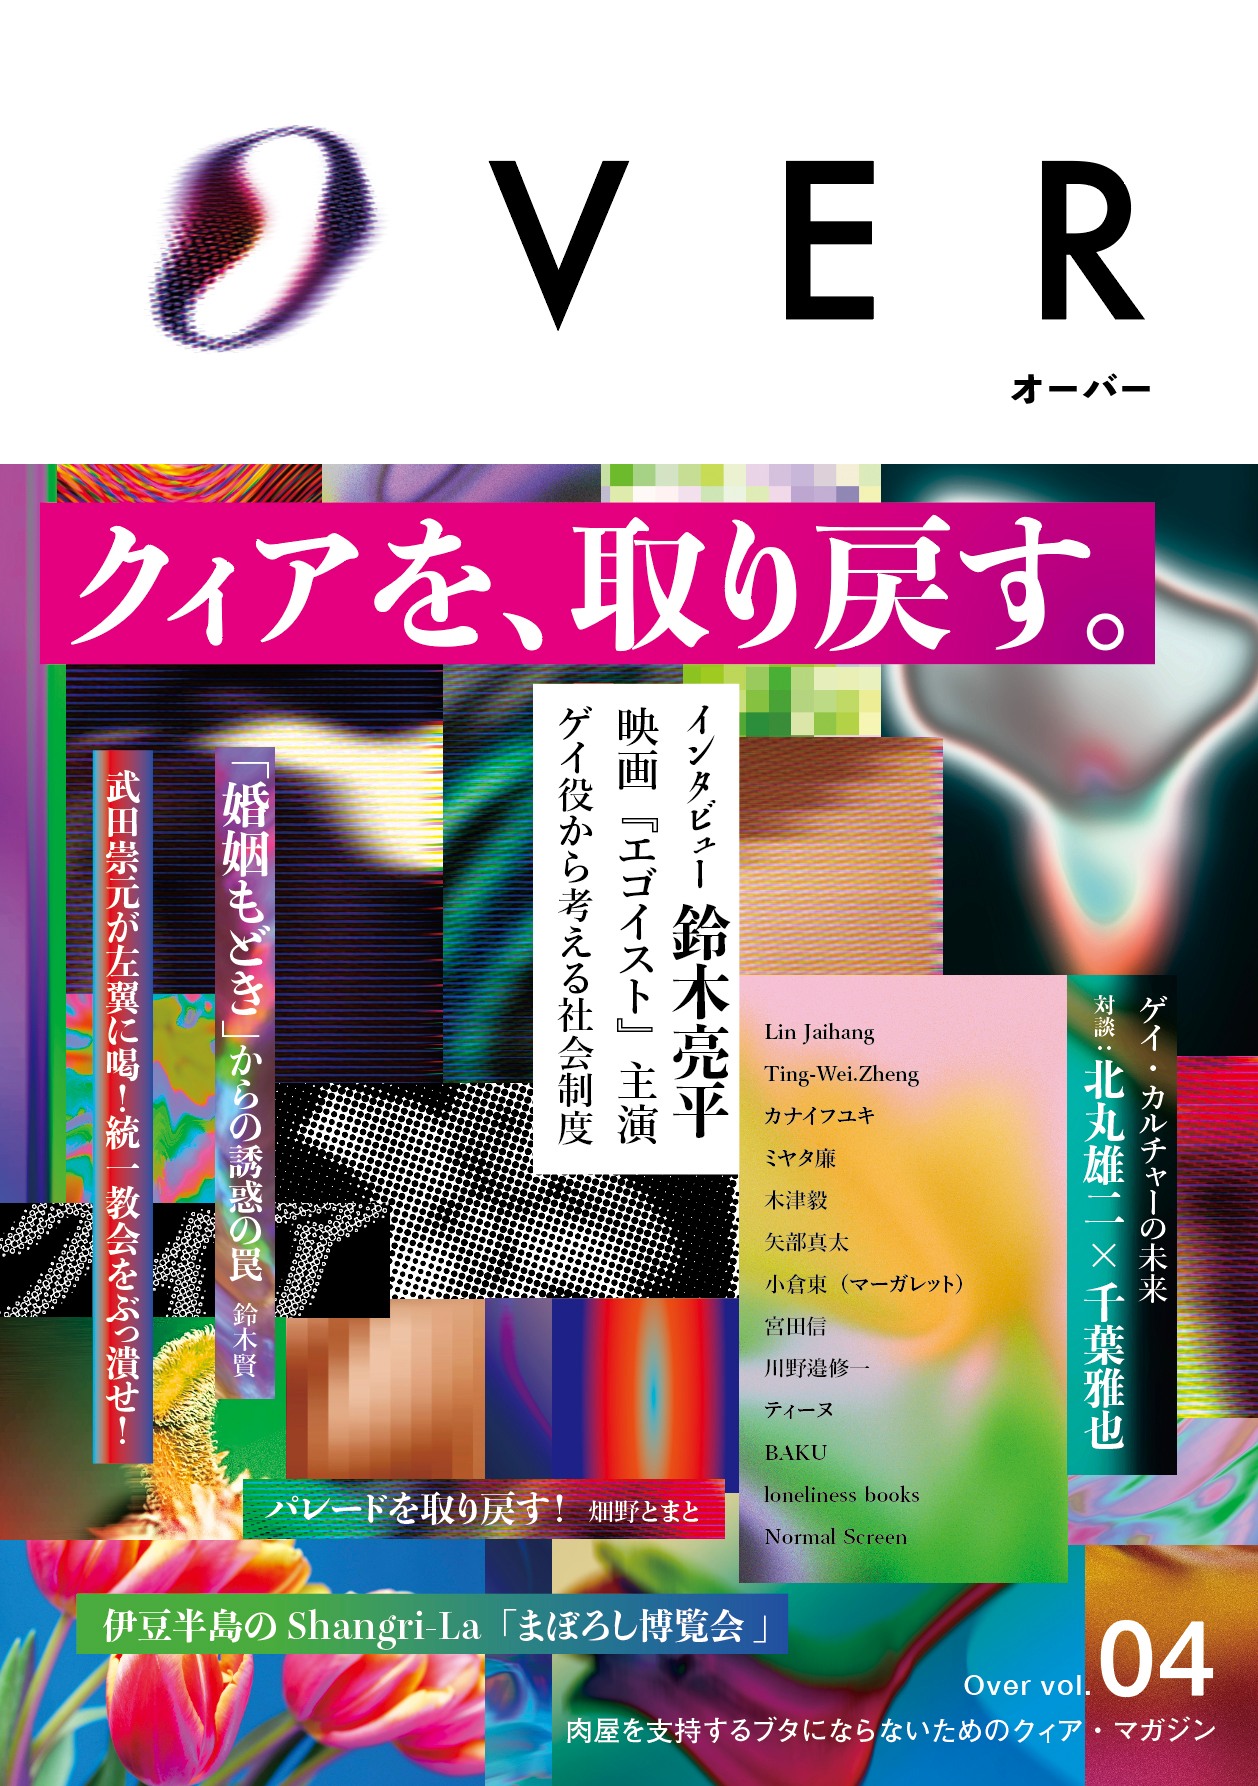 『Over vol .04』先行販売受付中！